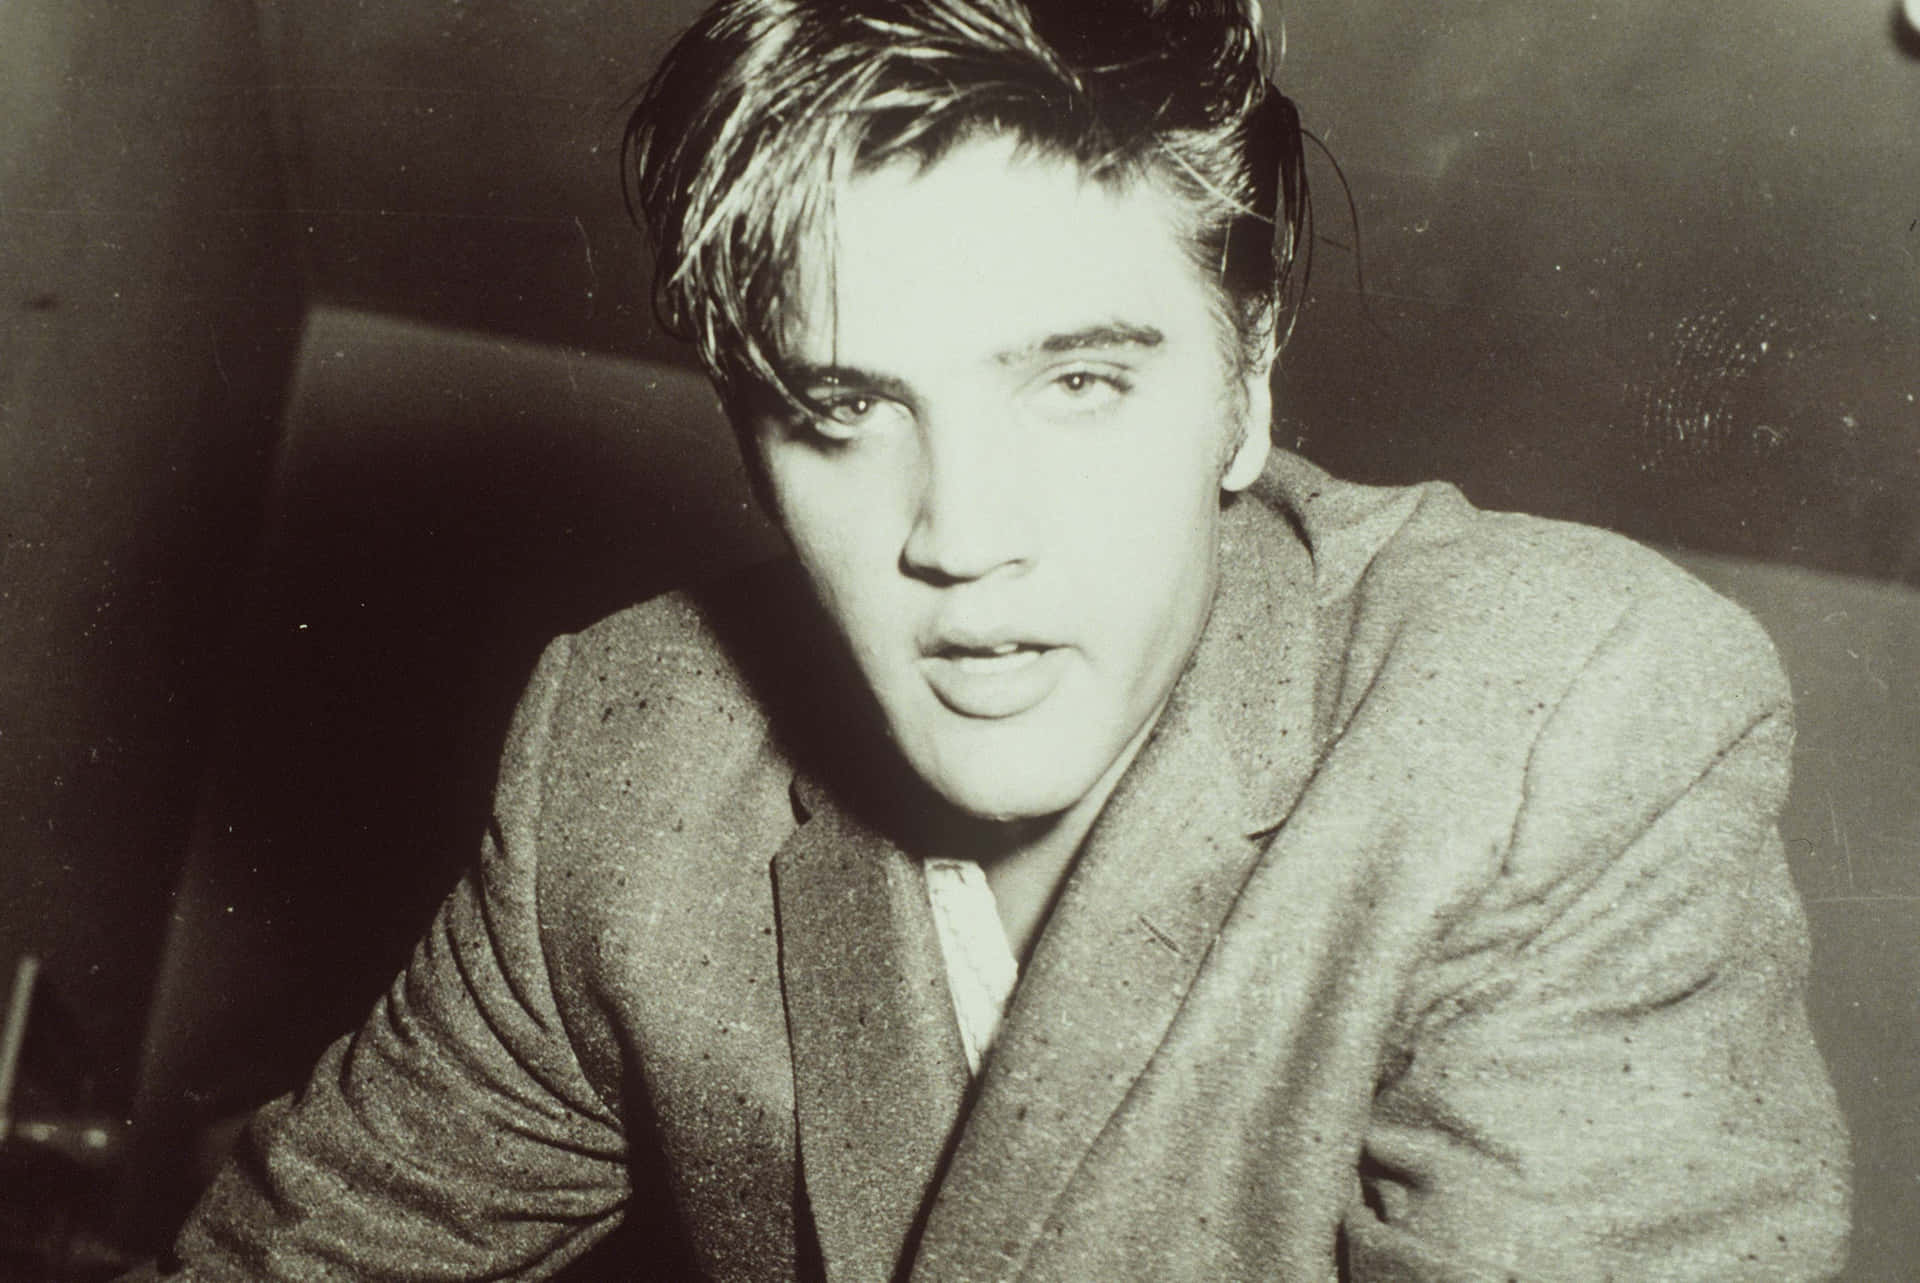 Iconic image of music legend Elvis Presley